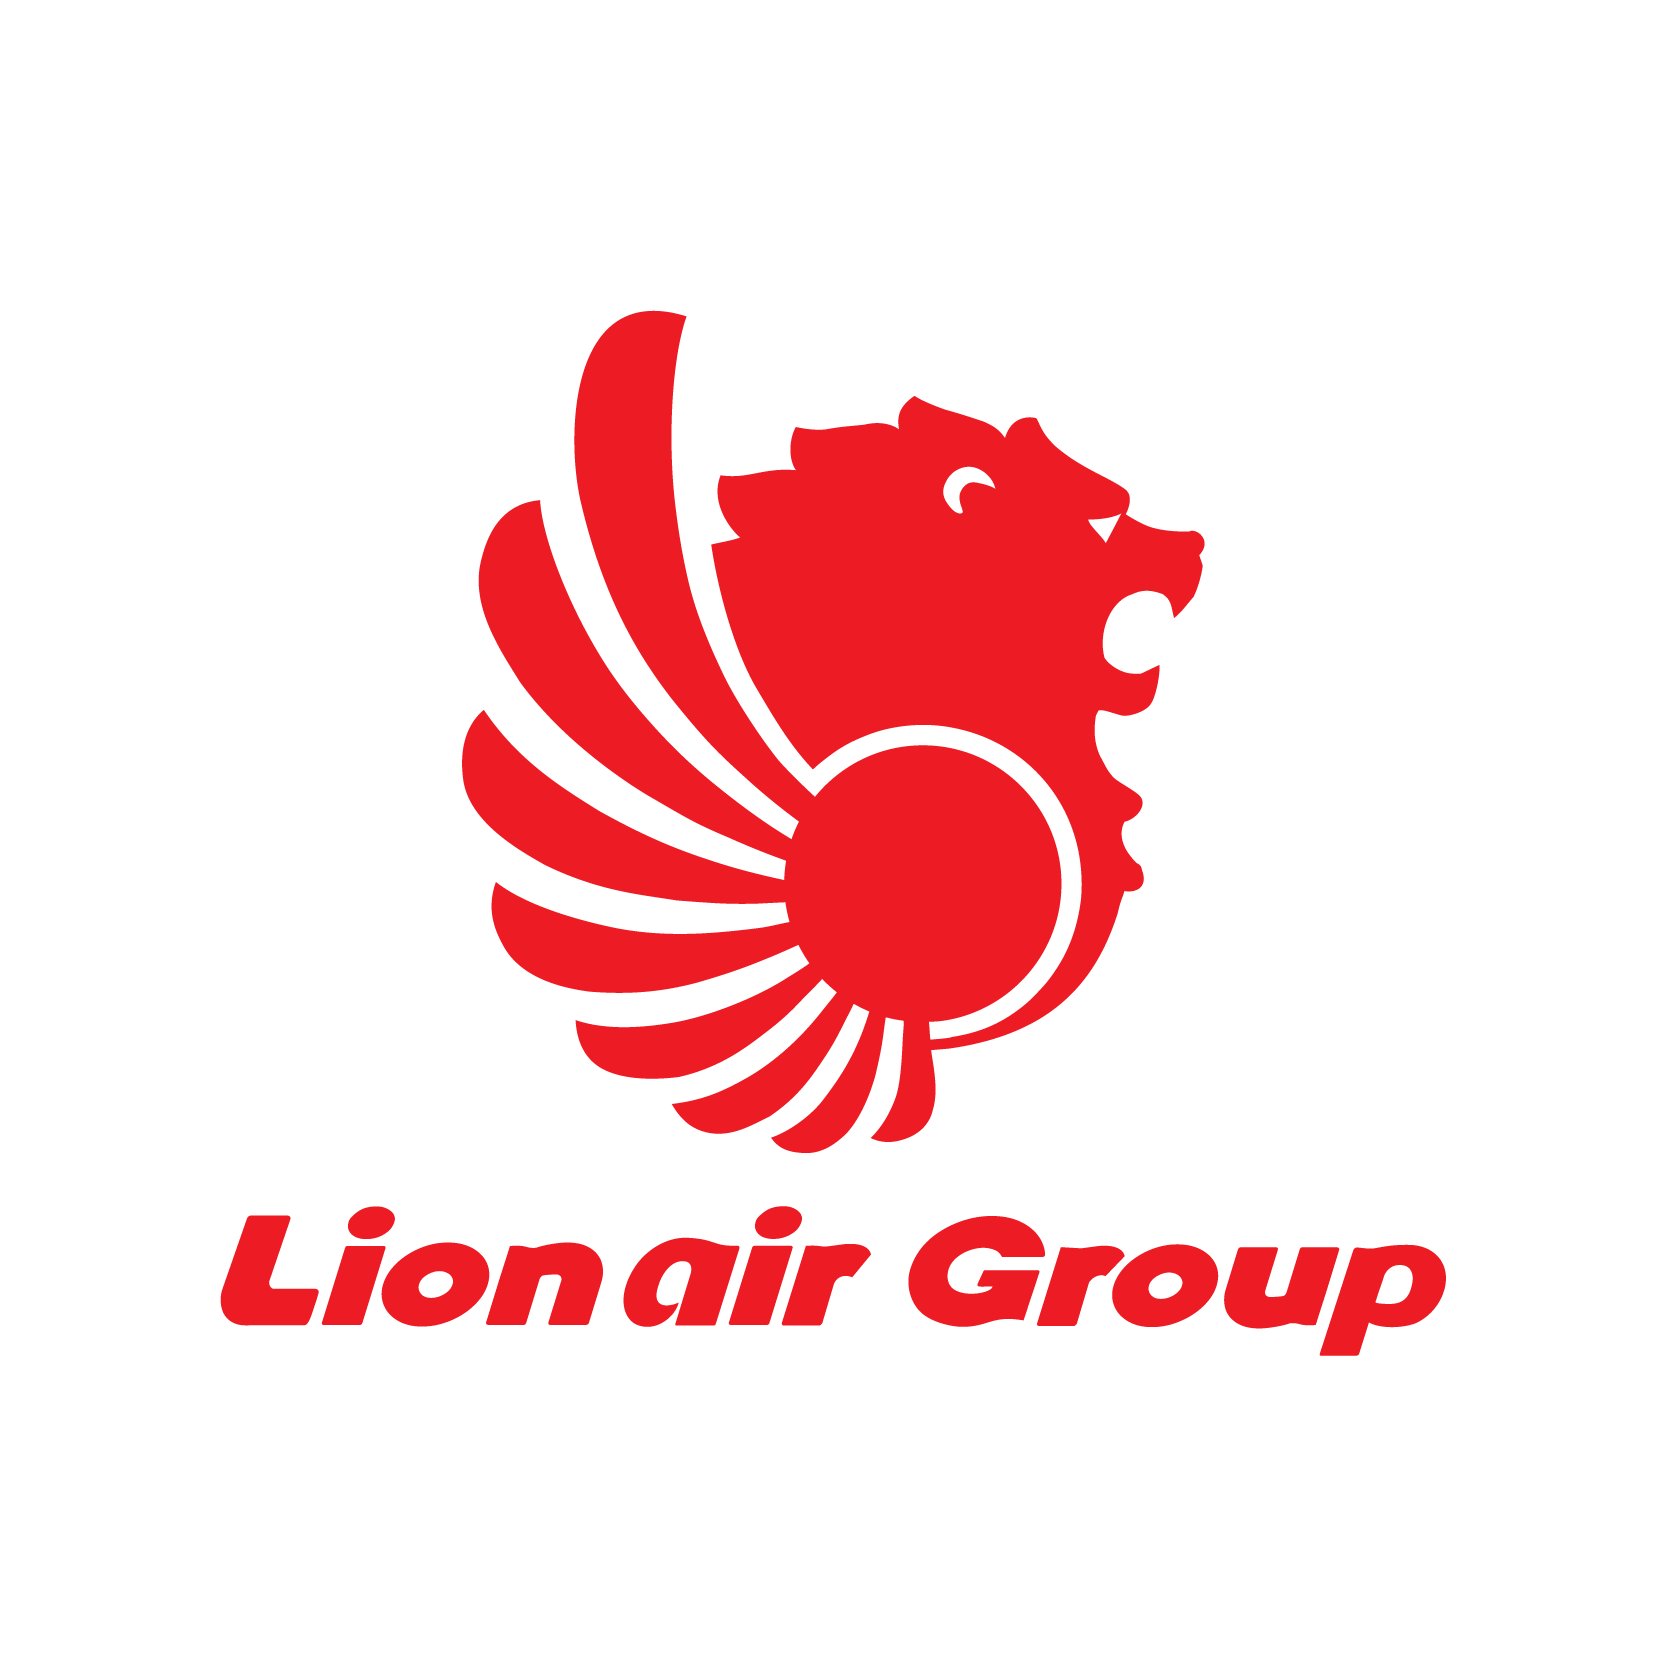 lowongan kerja lion air group